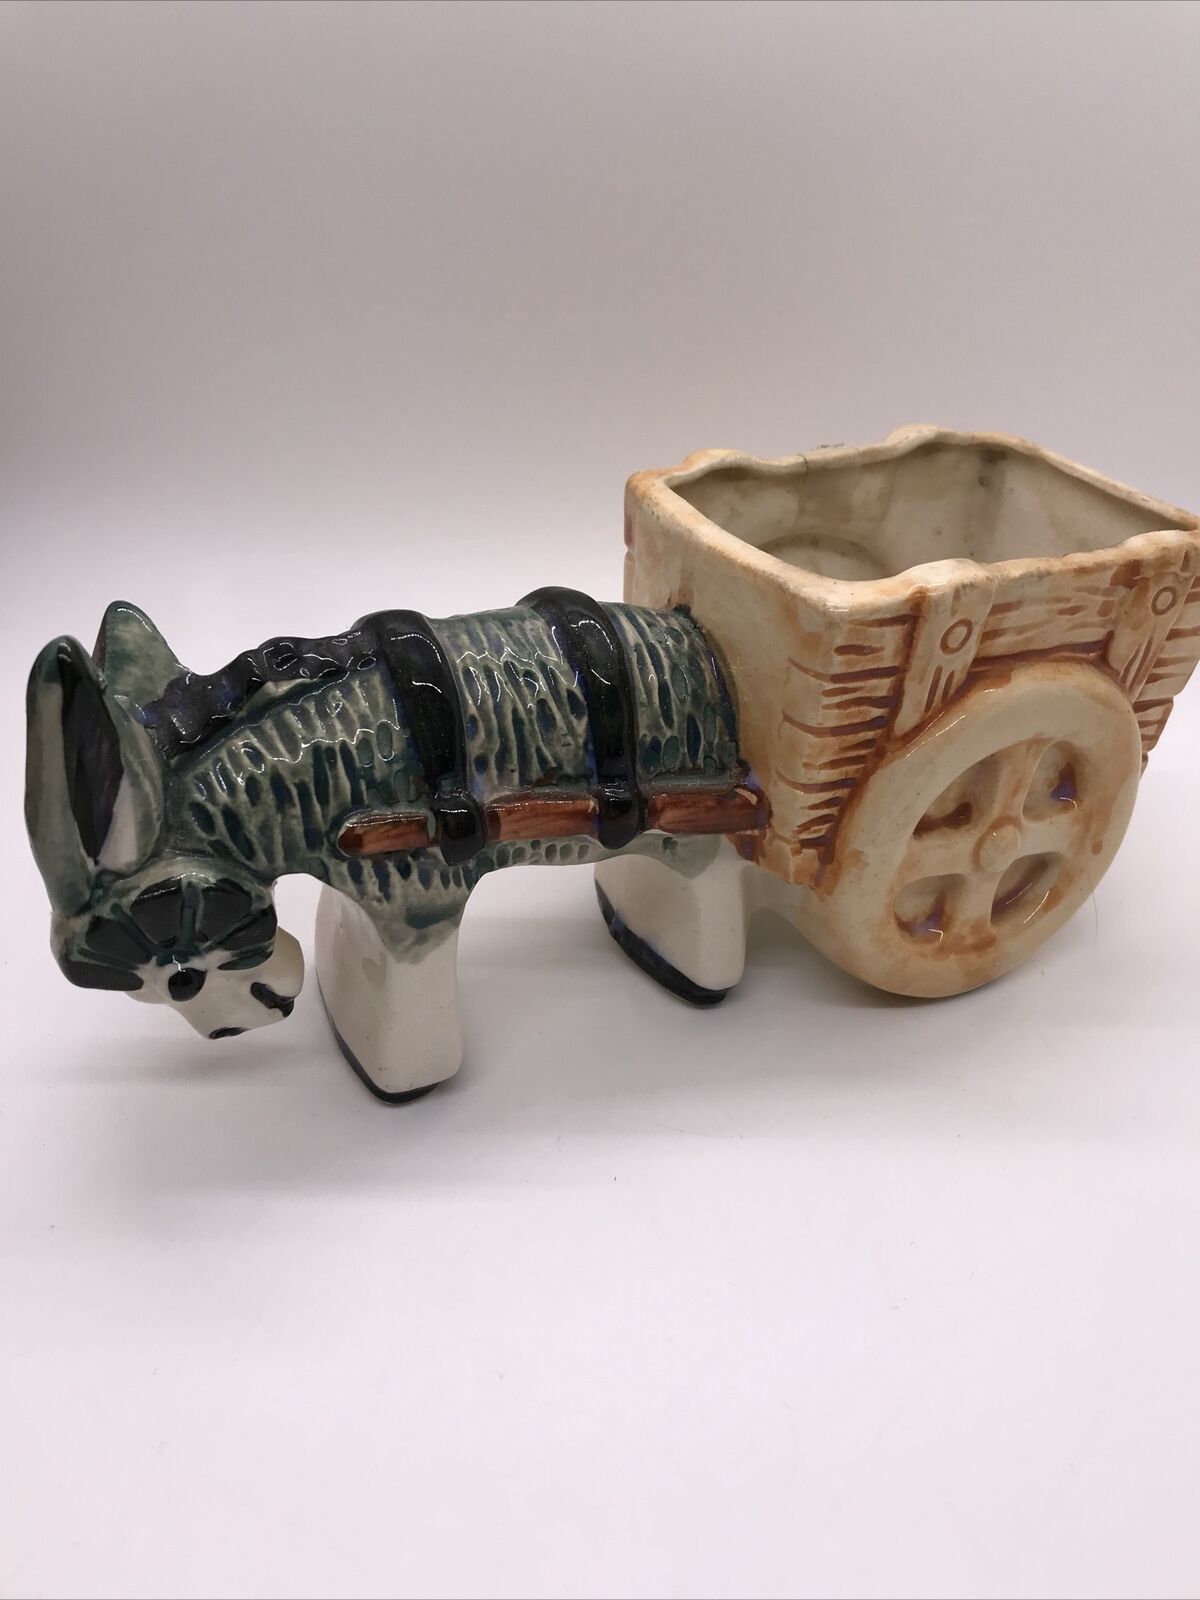 Vintage Ceramic Donkey Mule Cart Figure Made in Occupied Japan planter